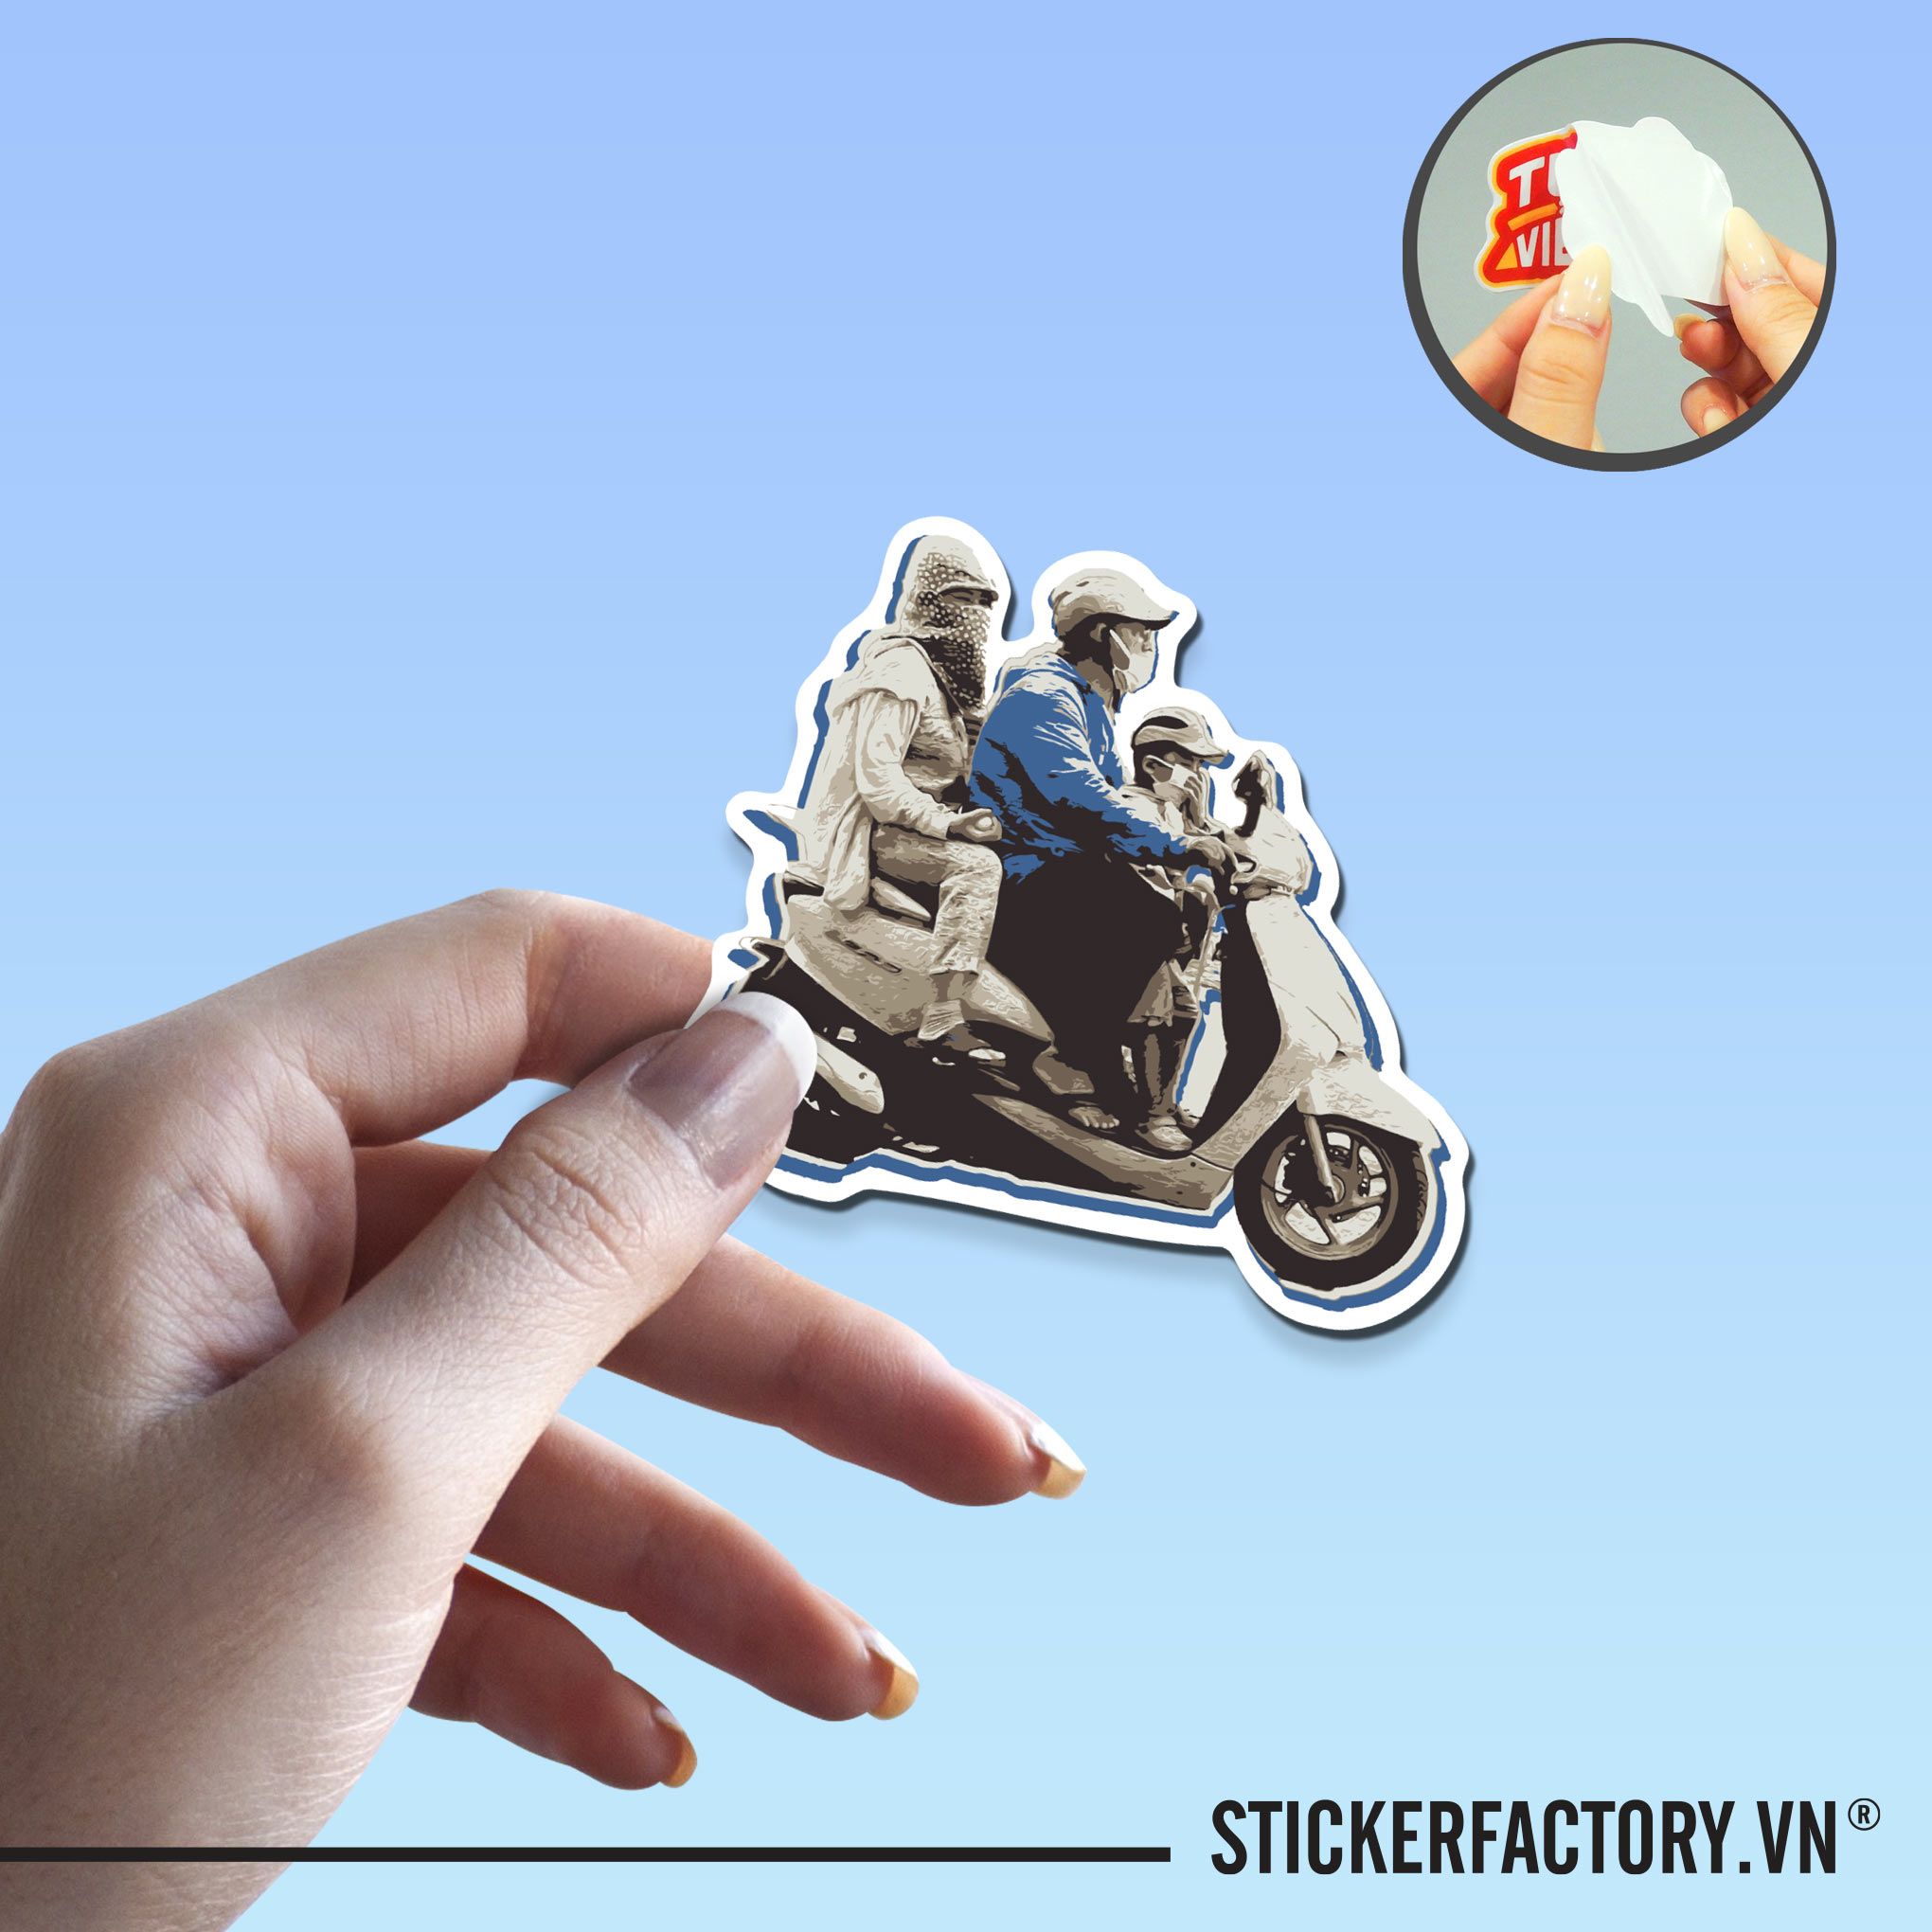 VIETNAM MOTORBIKE FAMILY 7cm - Sticker Die-cut hình dán cắt rời